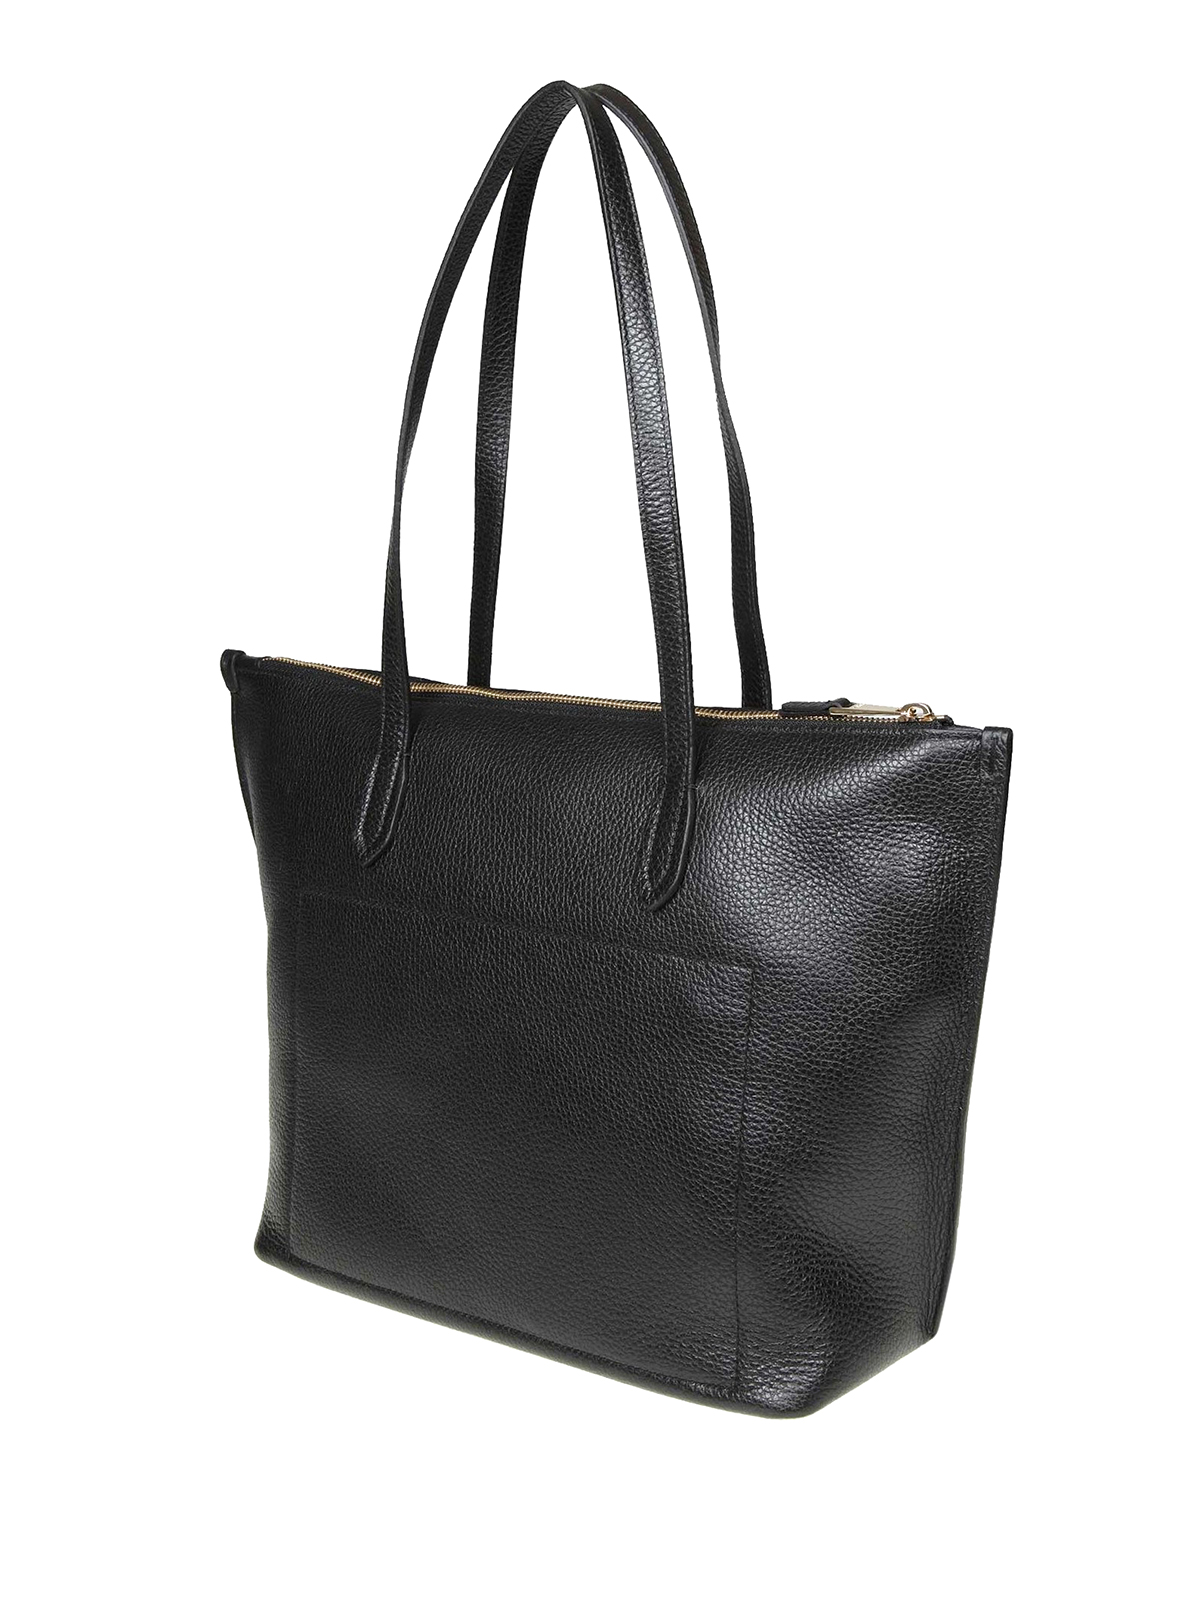 Totes bags Furla - Luce black medium tote - 1023583 | Shop online at iKRIX